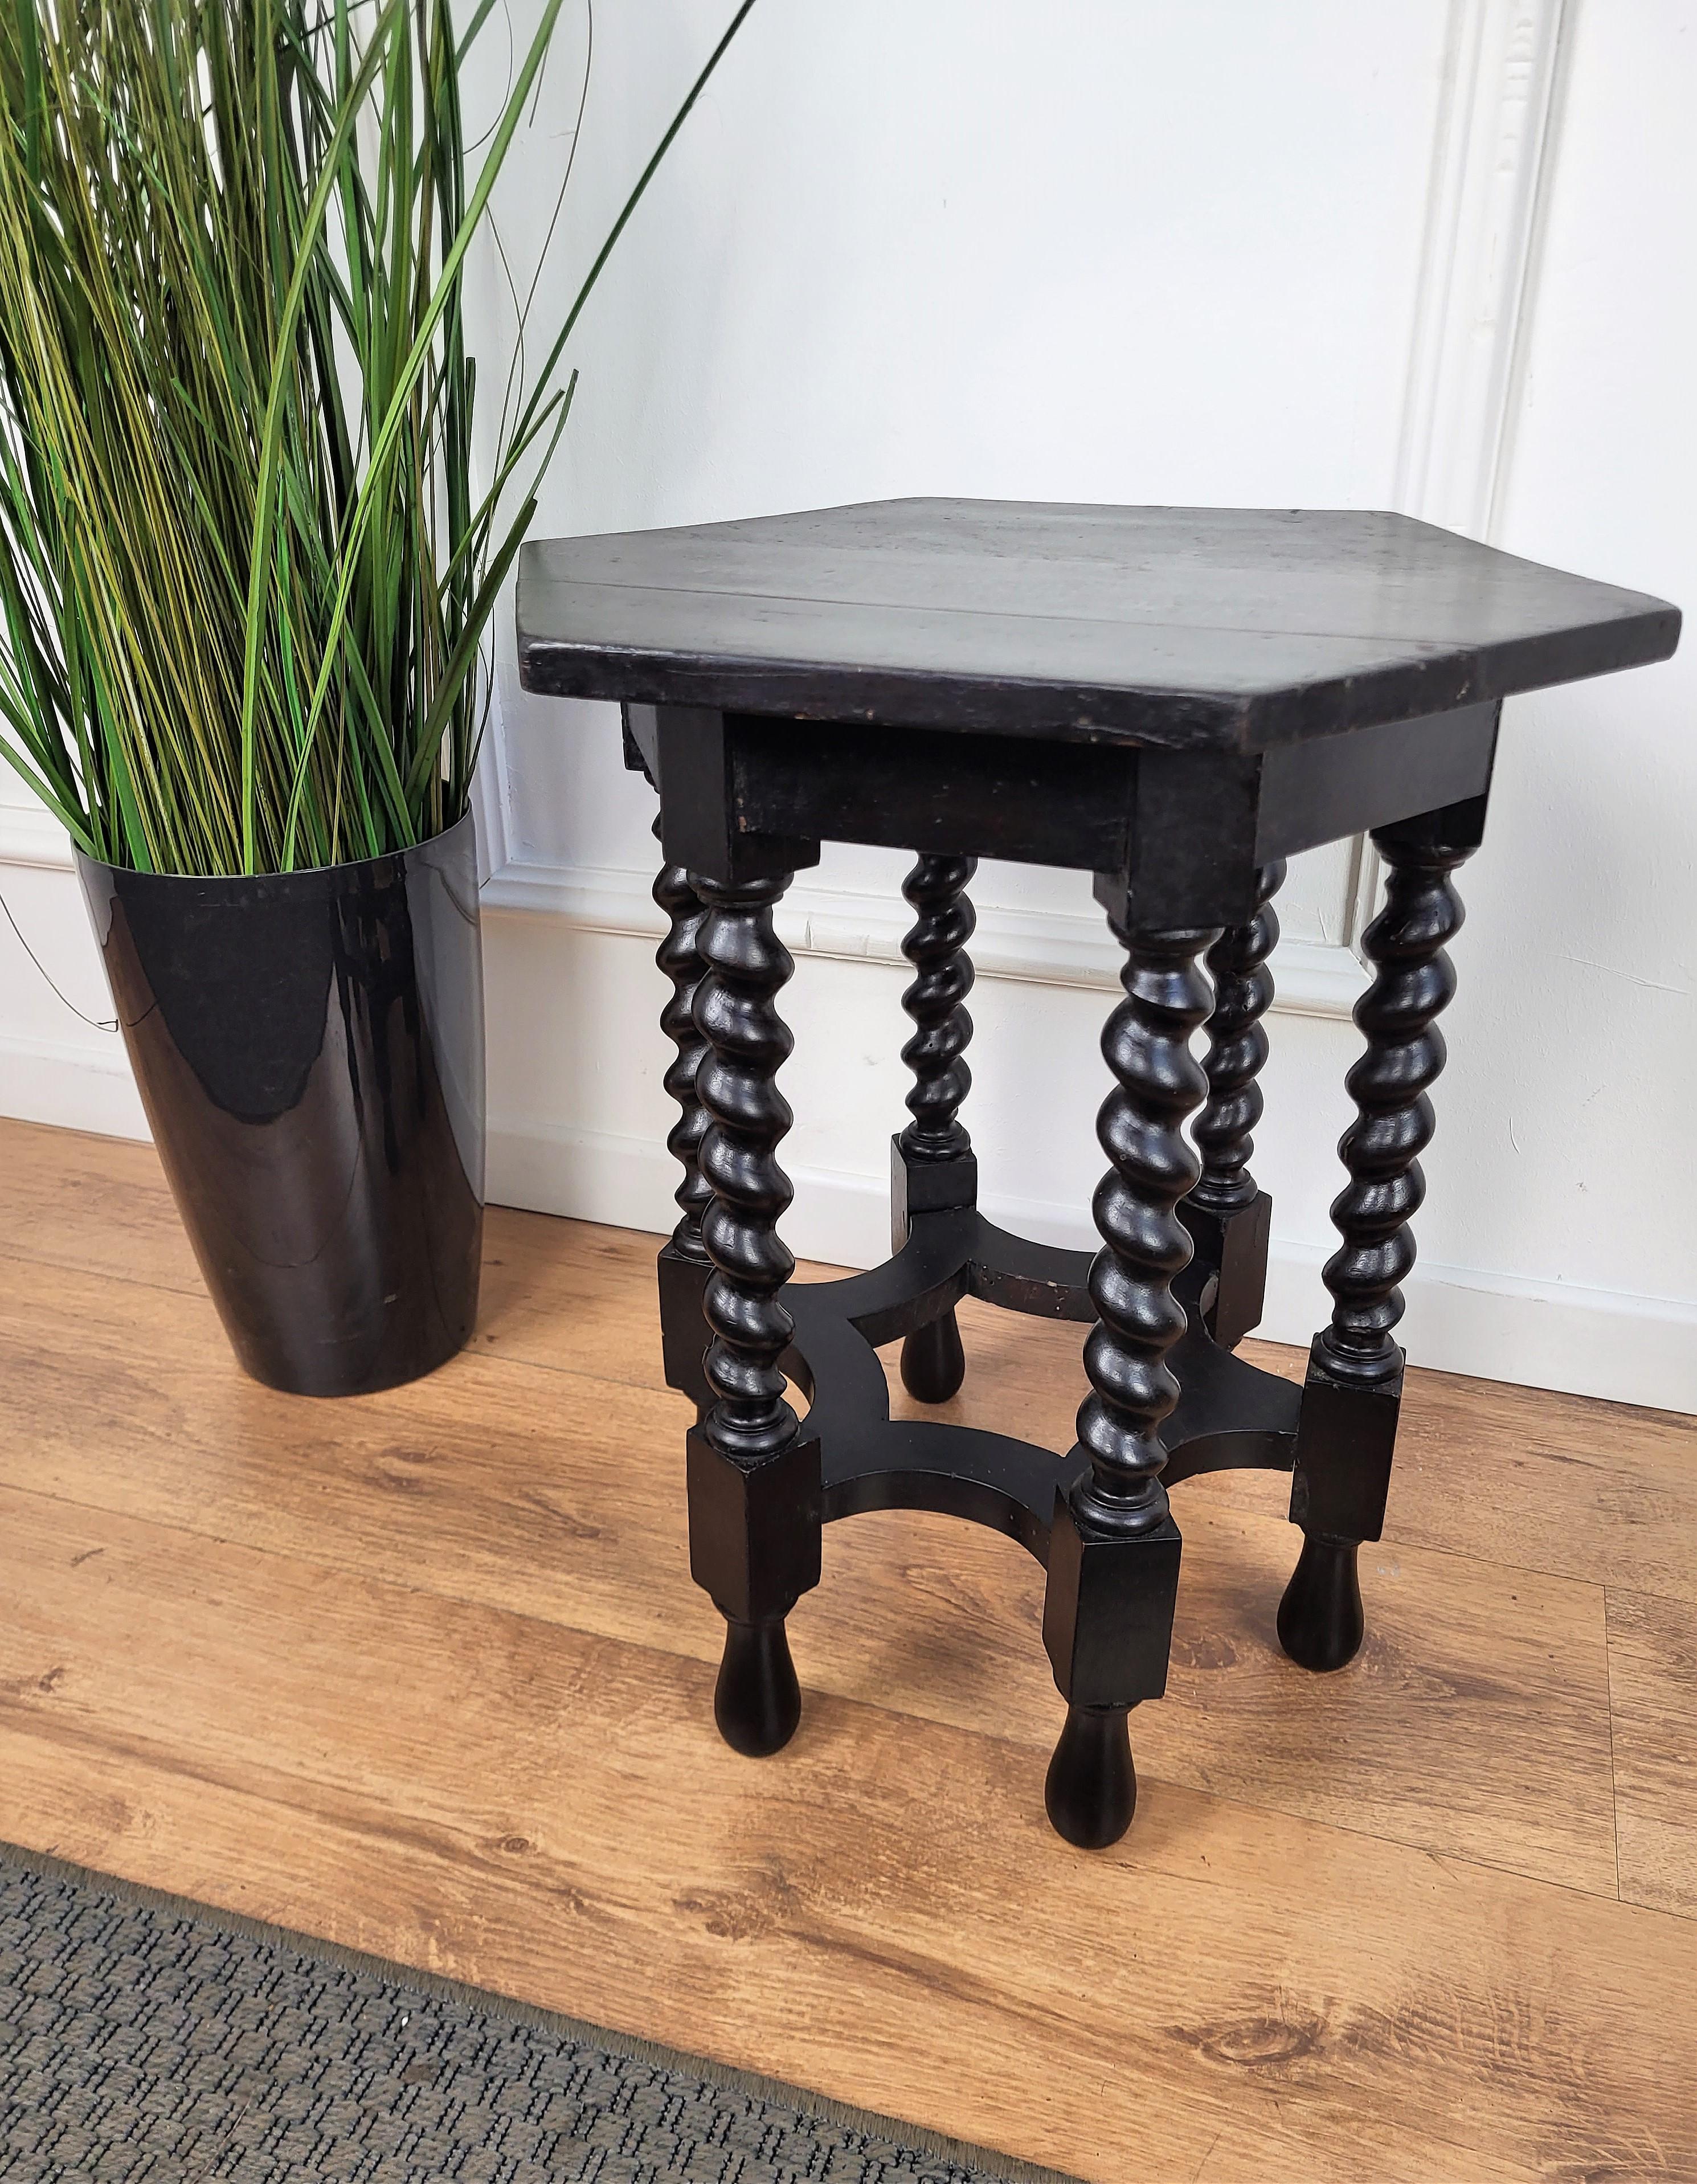 Renaissance Antique Italian Hexagonal Black Walnut Side Table Stool with Bobbin Turned Legs